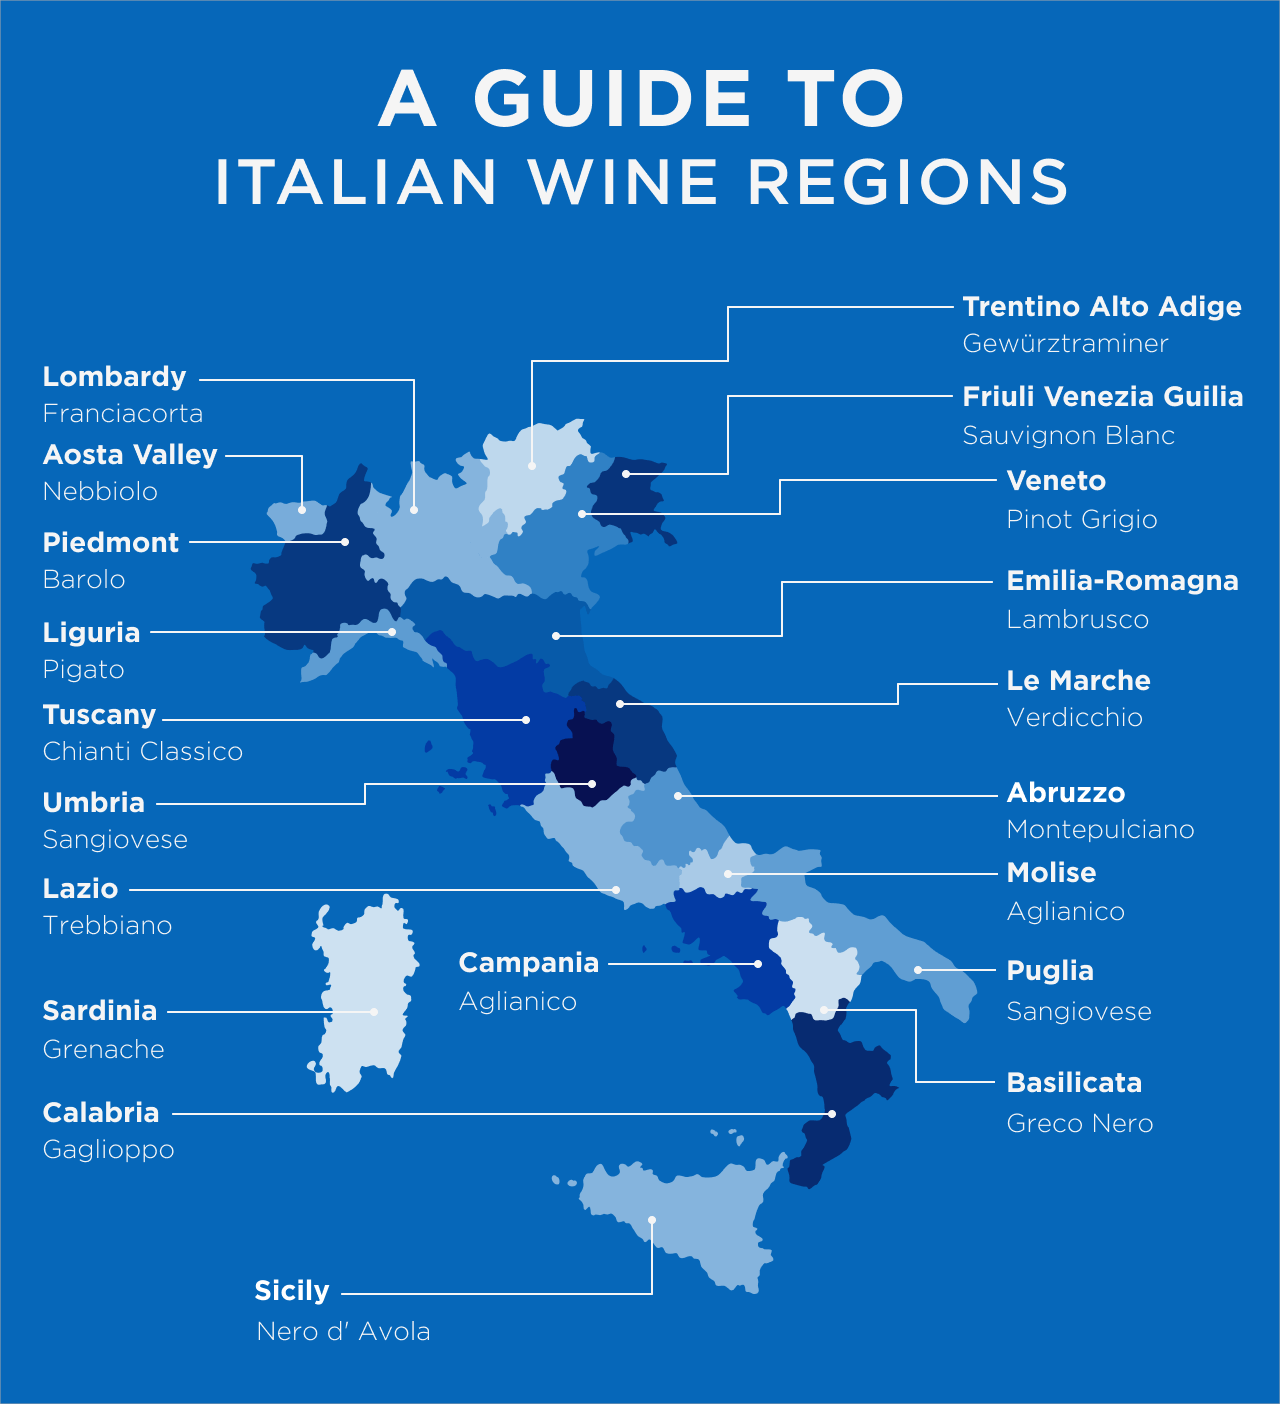 A Guide to Italian Wine Regions